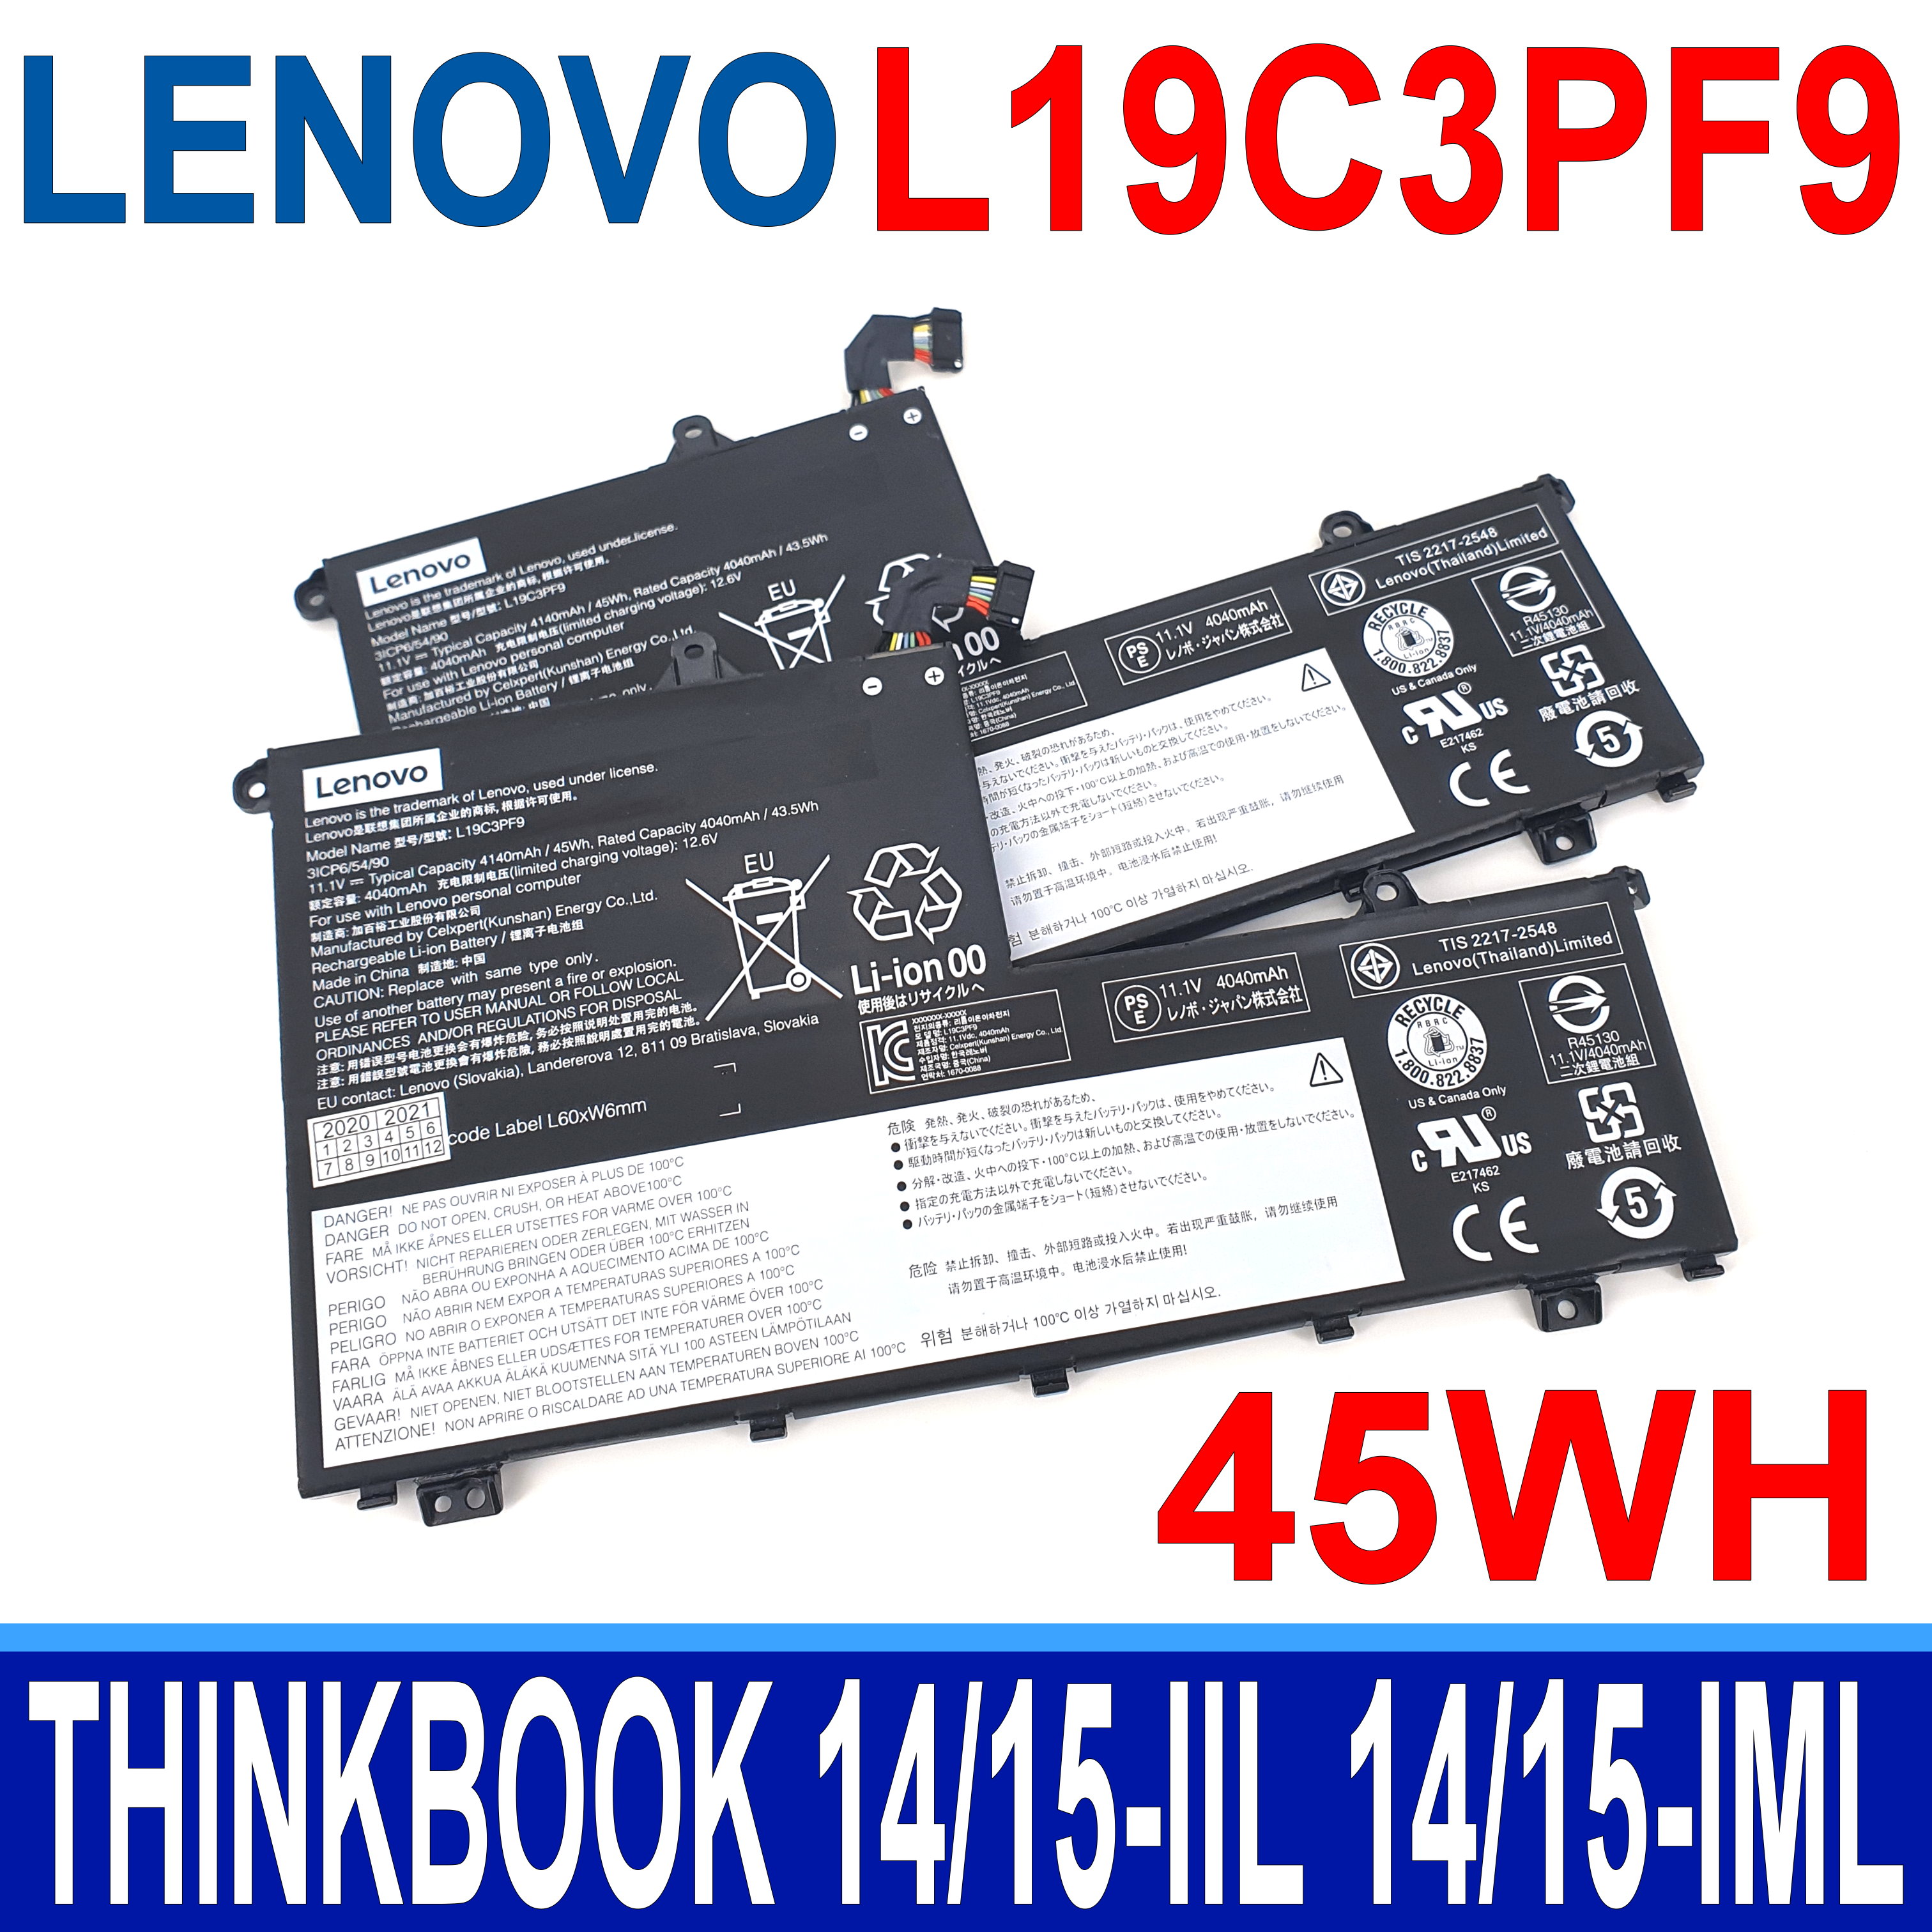 LENOVO L19C3PF9 原廠電池 L19M3PF9 L19L3PF1 L19L3PF8 L19M3PF0 L19M3PF1 L19C3PF1 L19D3PF0 L19D3PF1 L19D3PF2 THINKBOOK 14-IIL 14-IML 15-IIL 15-IML